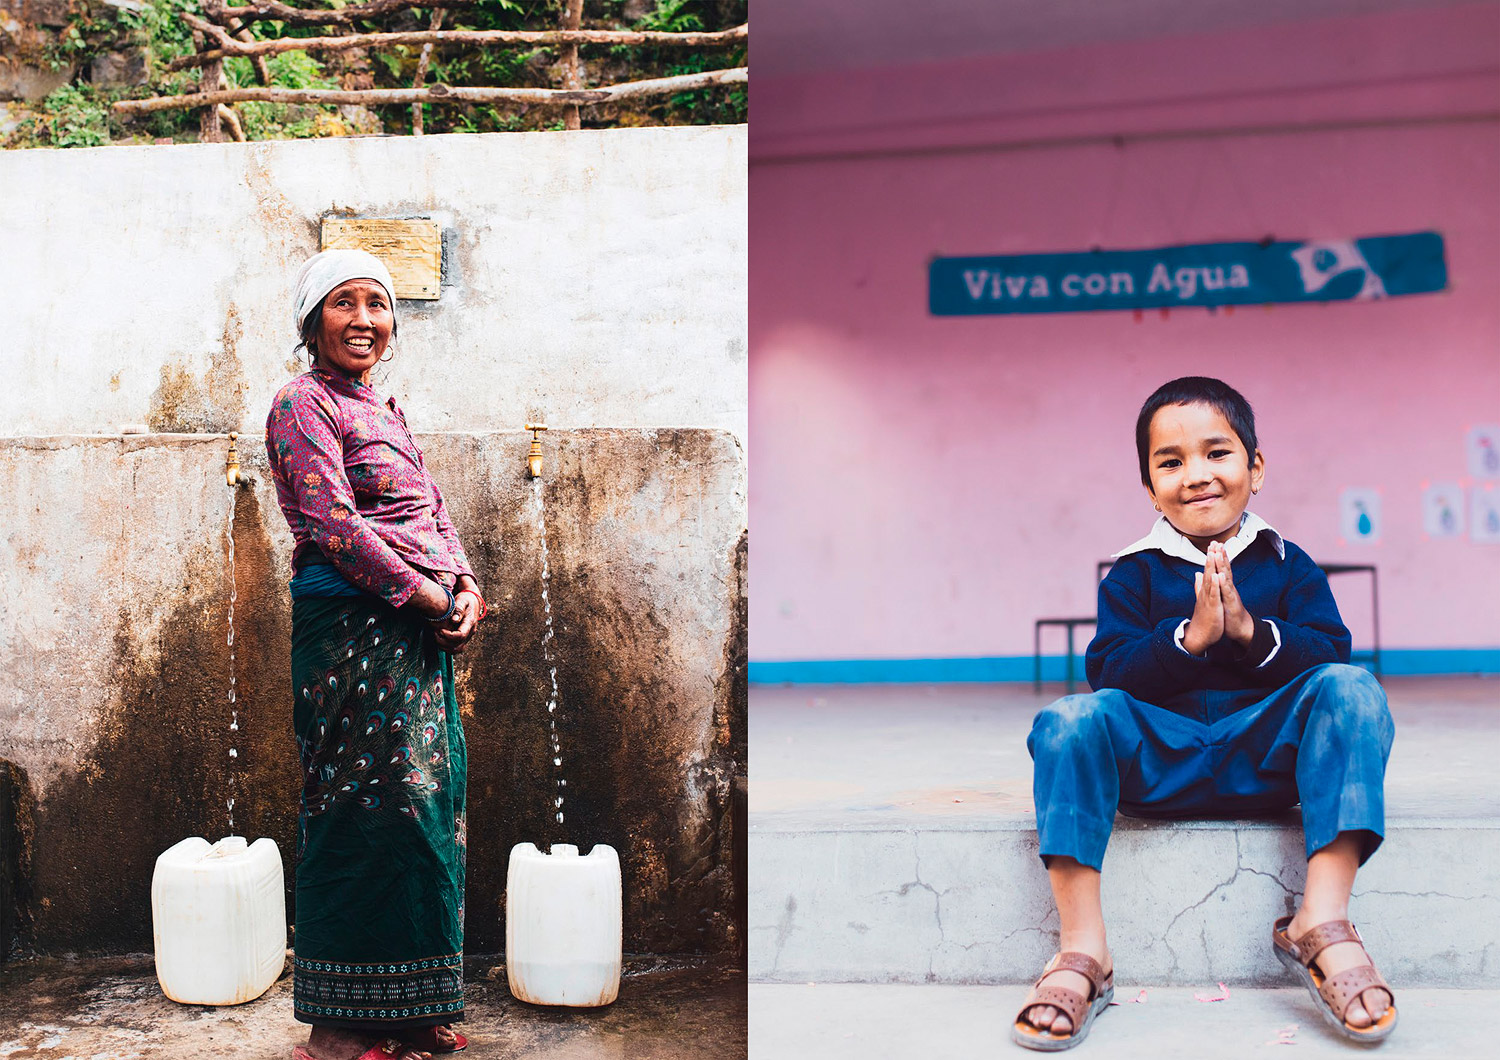 Viva con Agua - Nepal